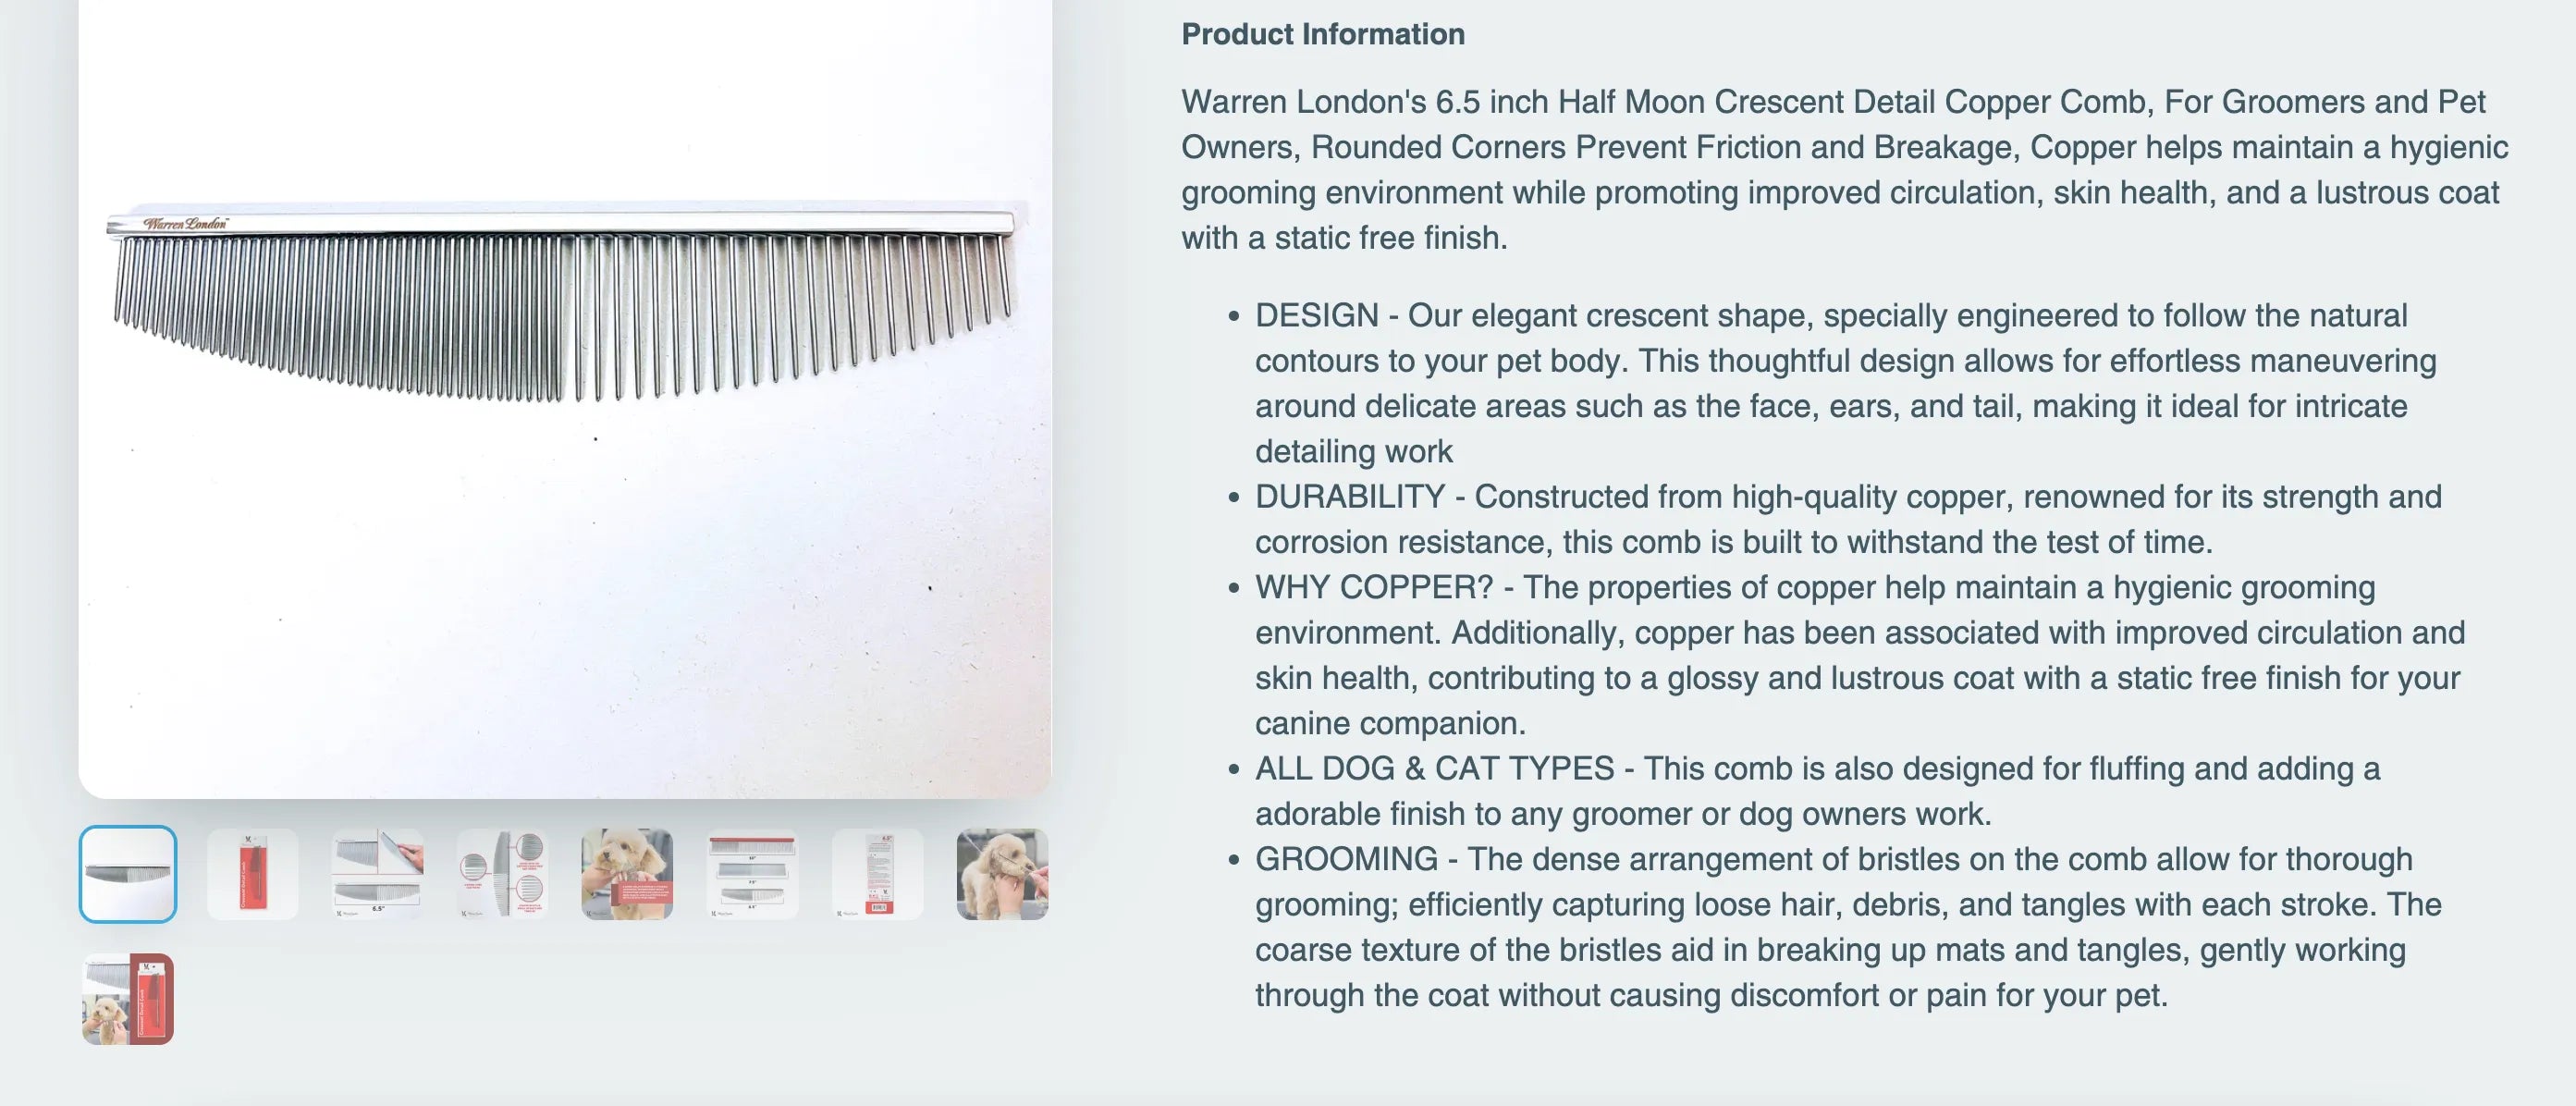 A screenshot of Warren London’s product description.